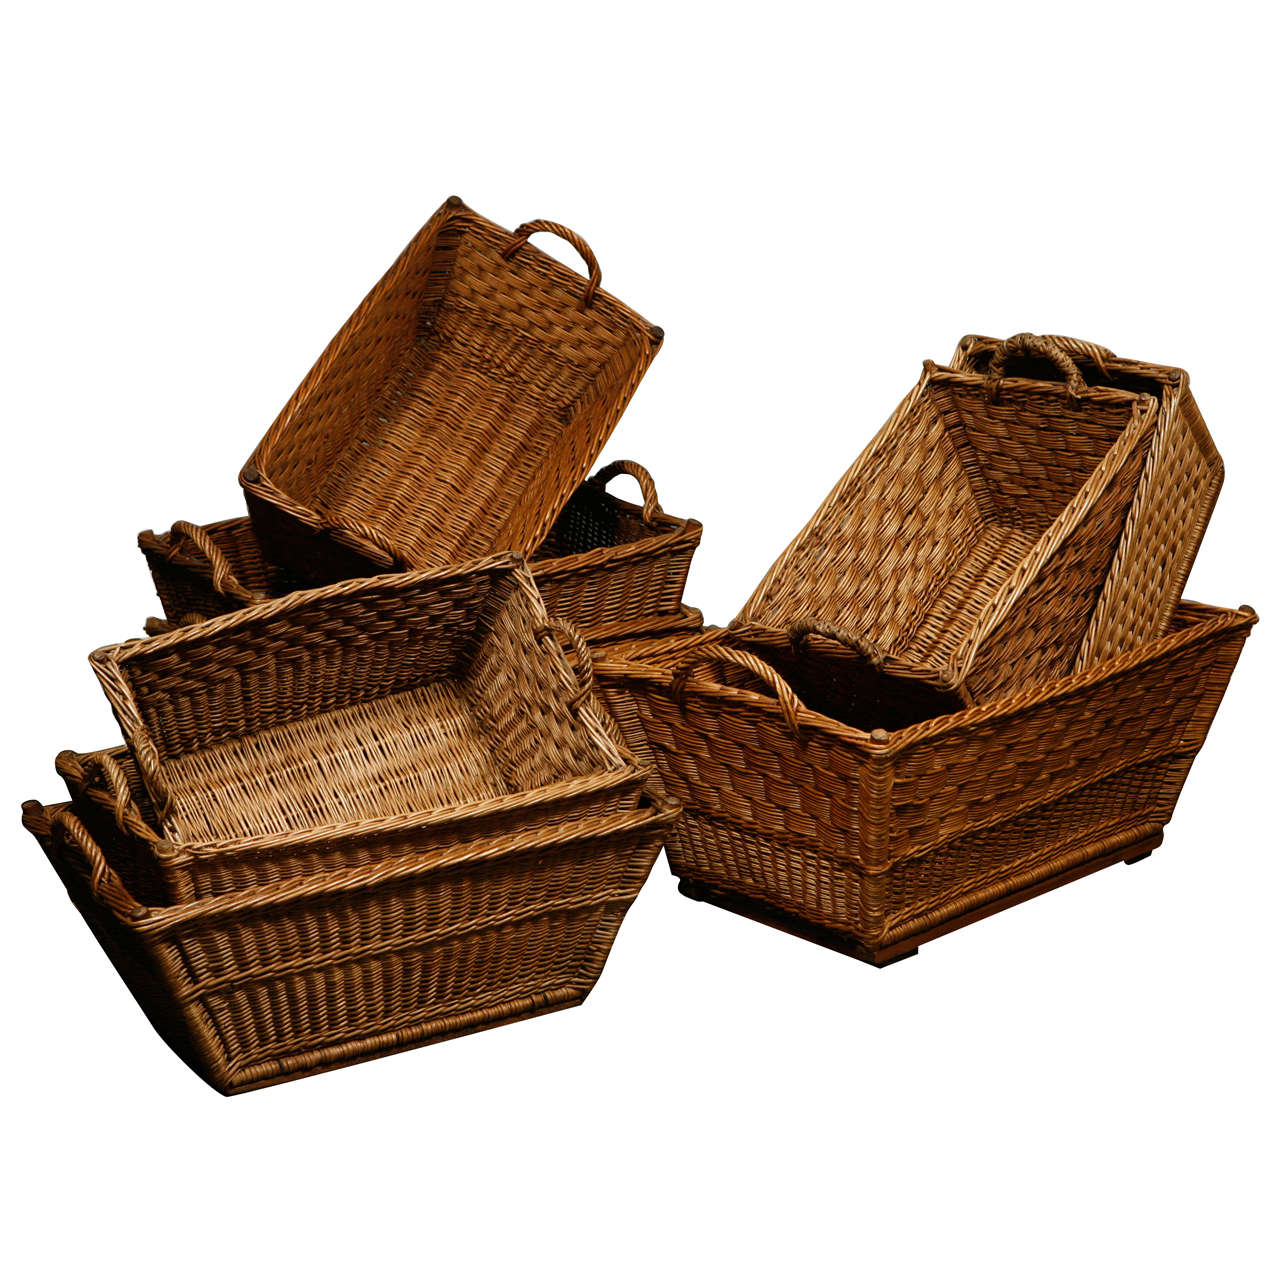 French wicker baskets, 1930s